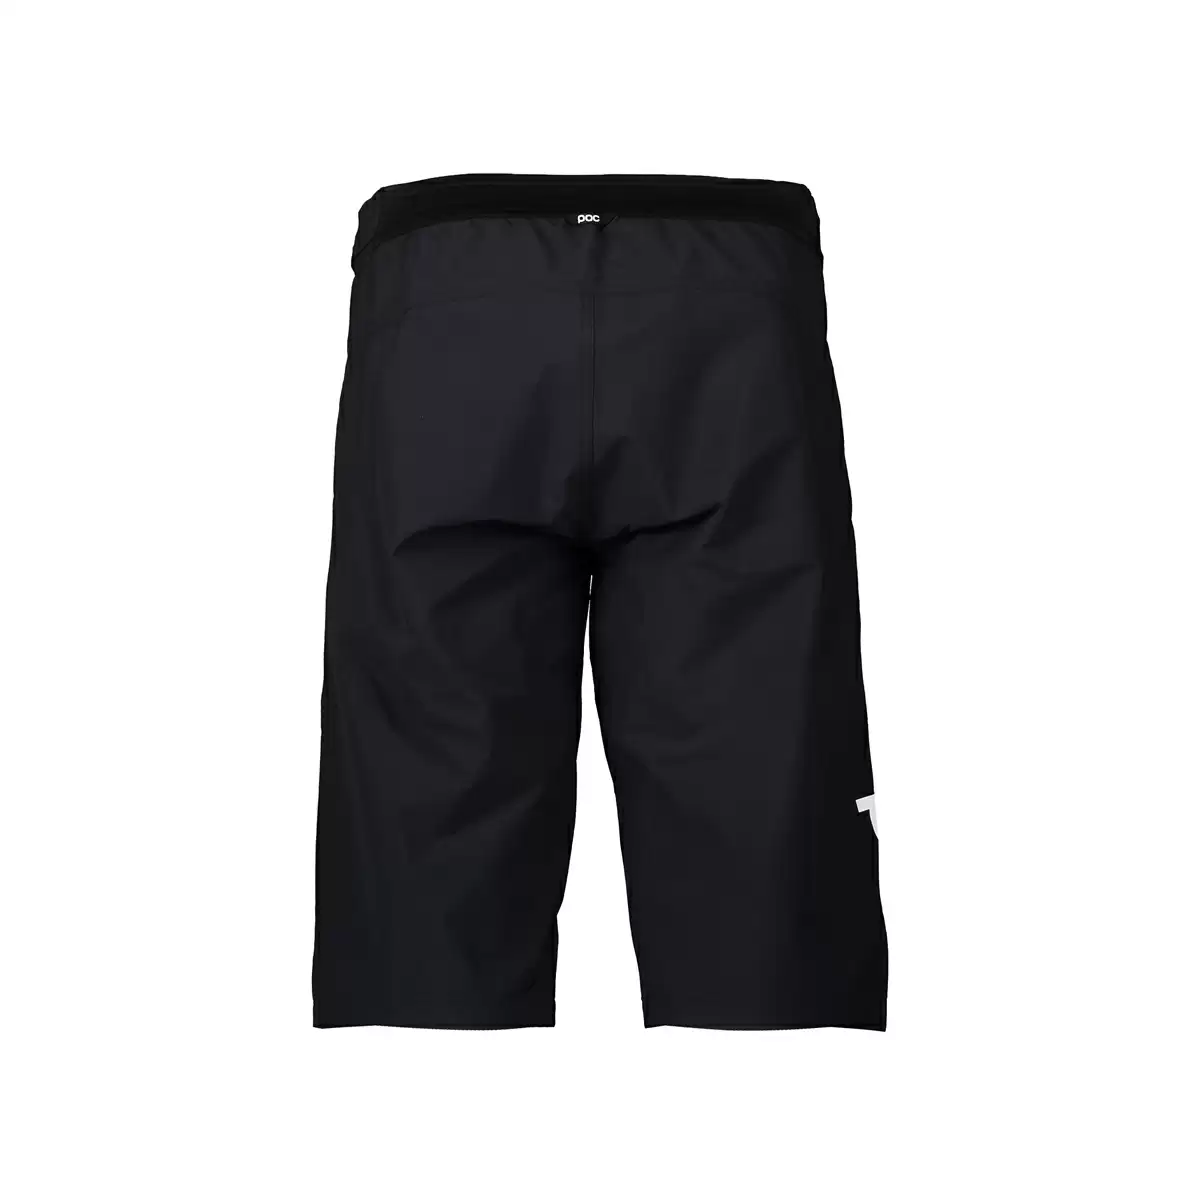 Essential Enduro Shorts black size M #1